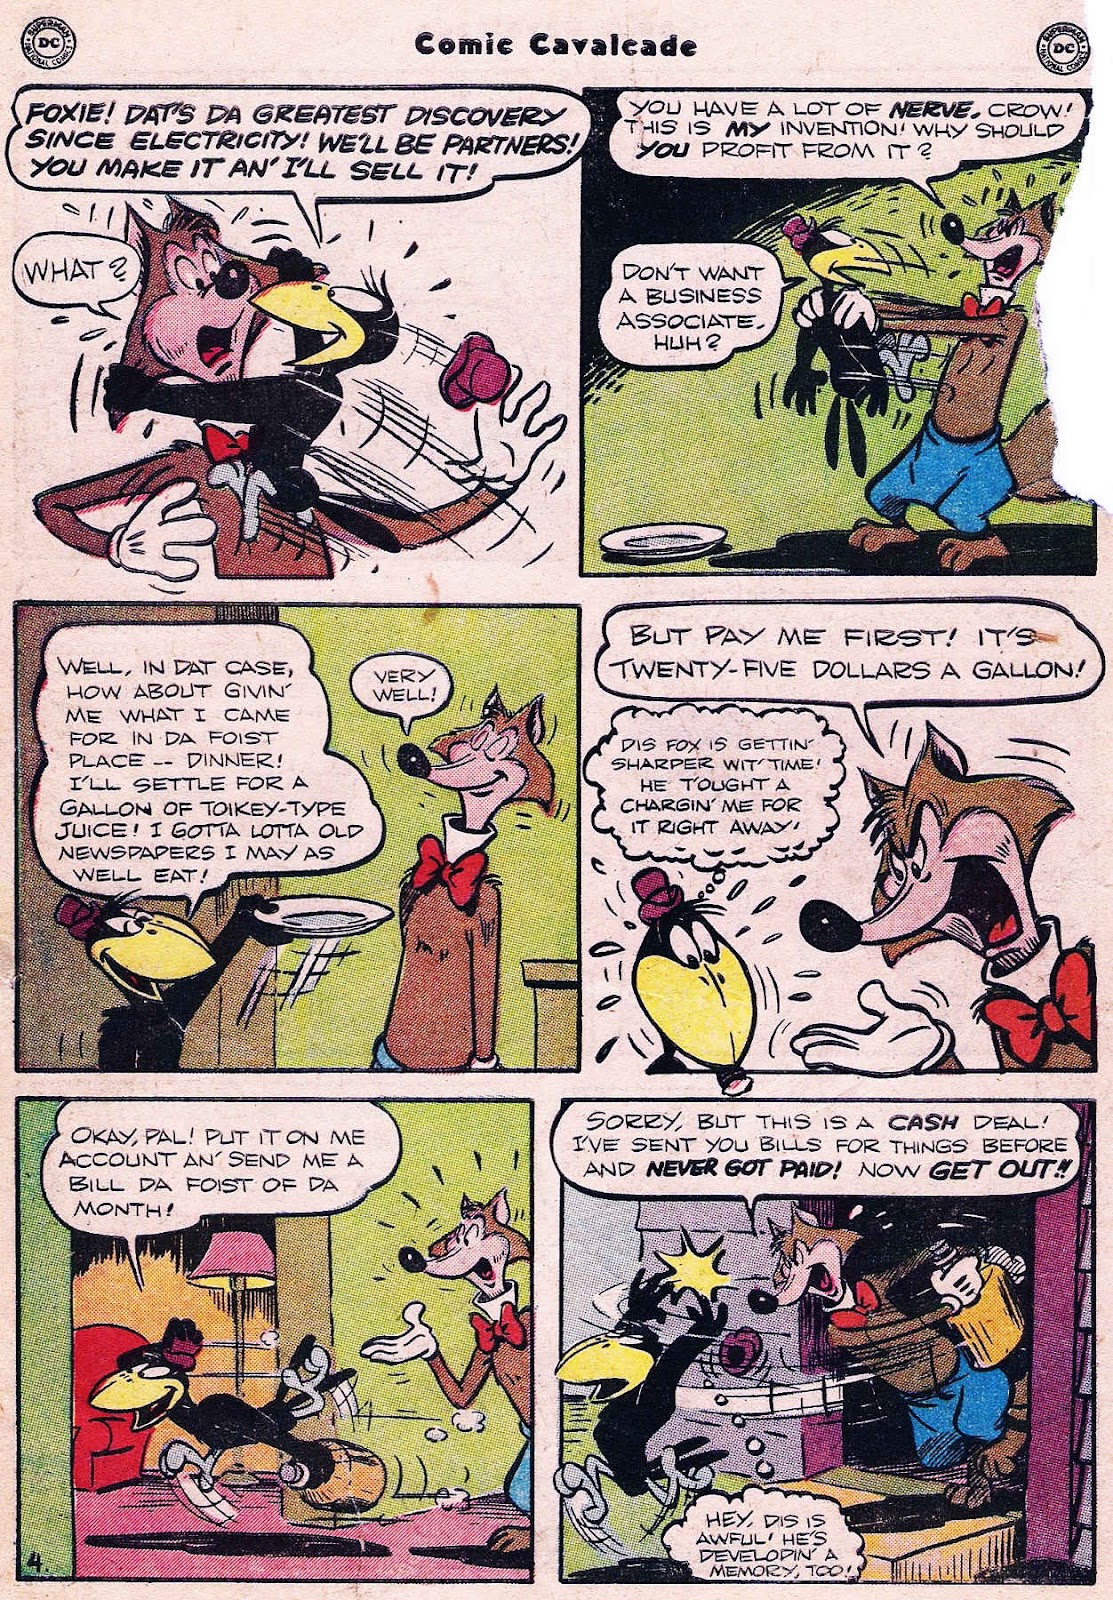 Comic Cavalcade issue 37 - Page 6